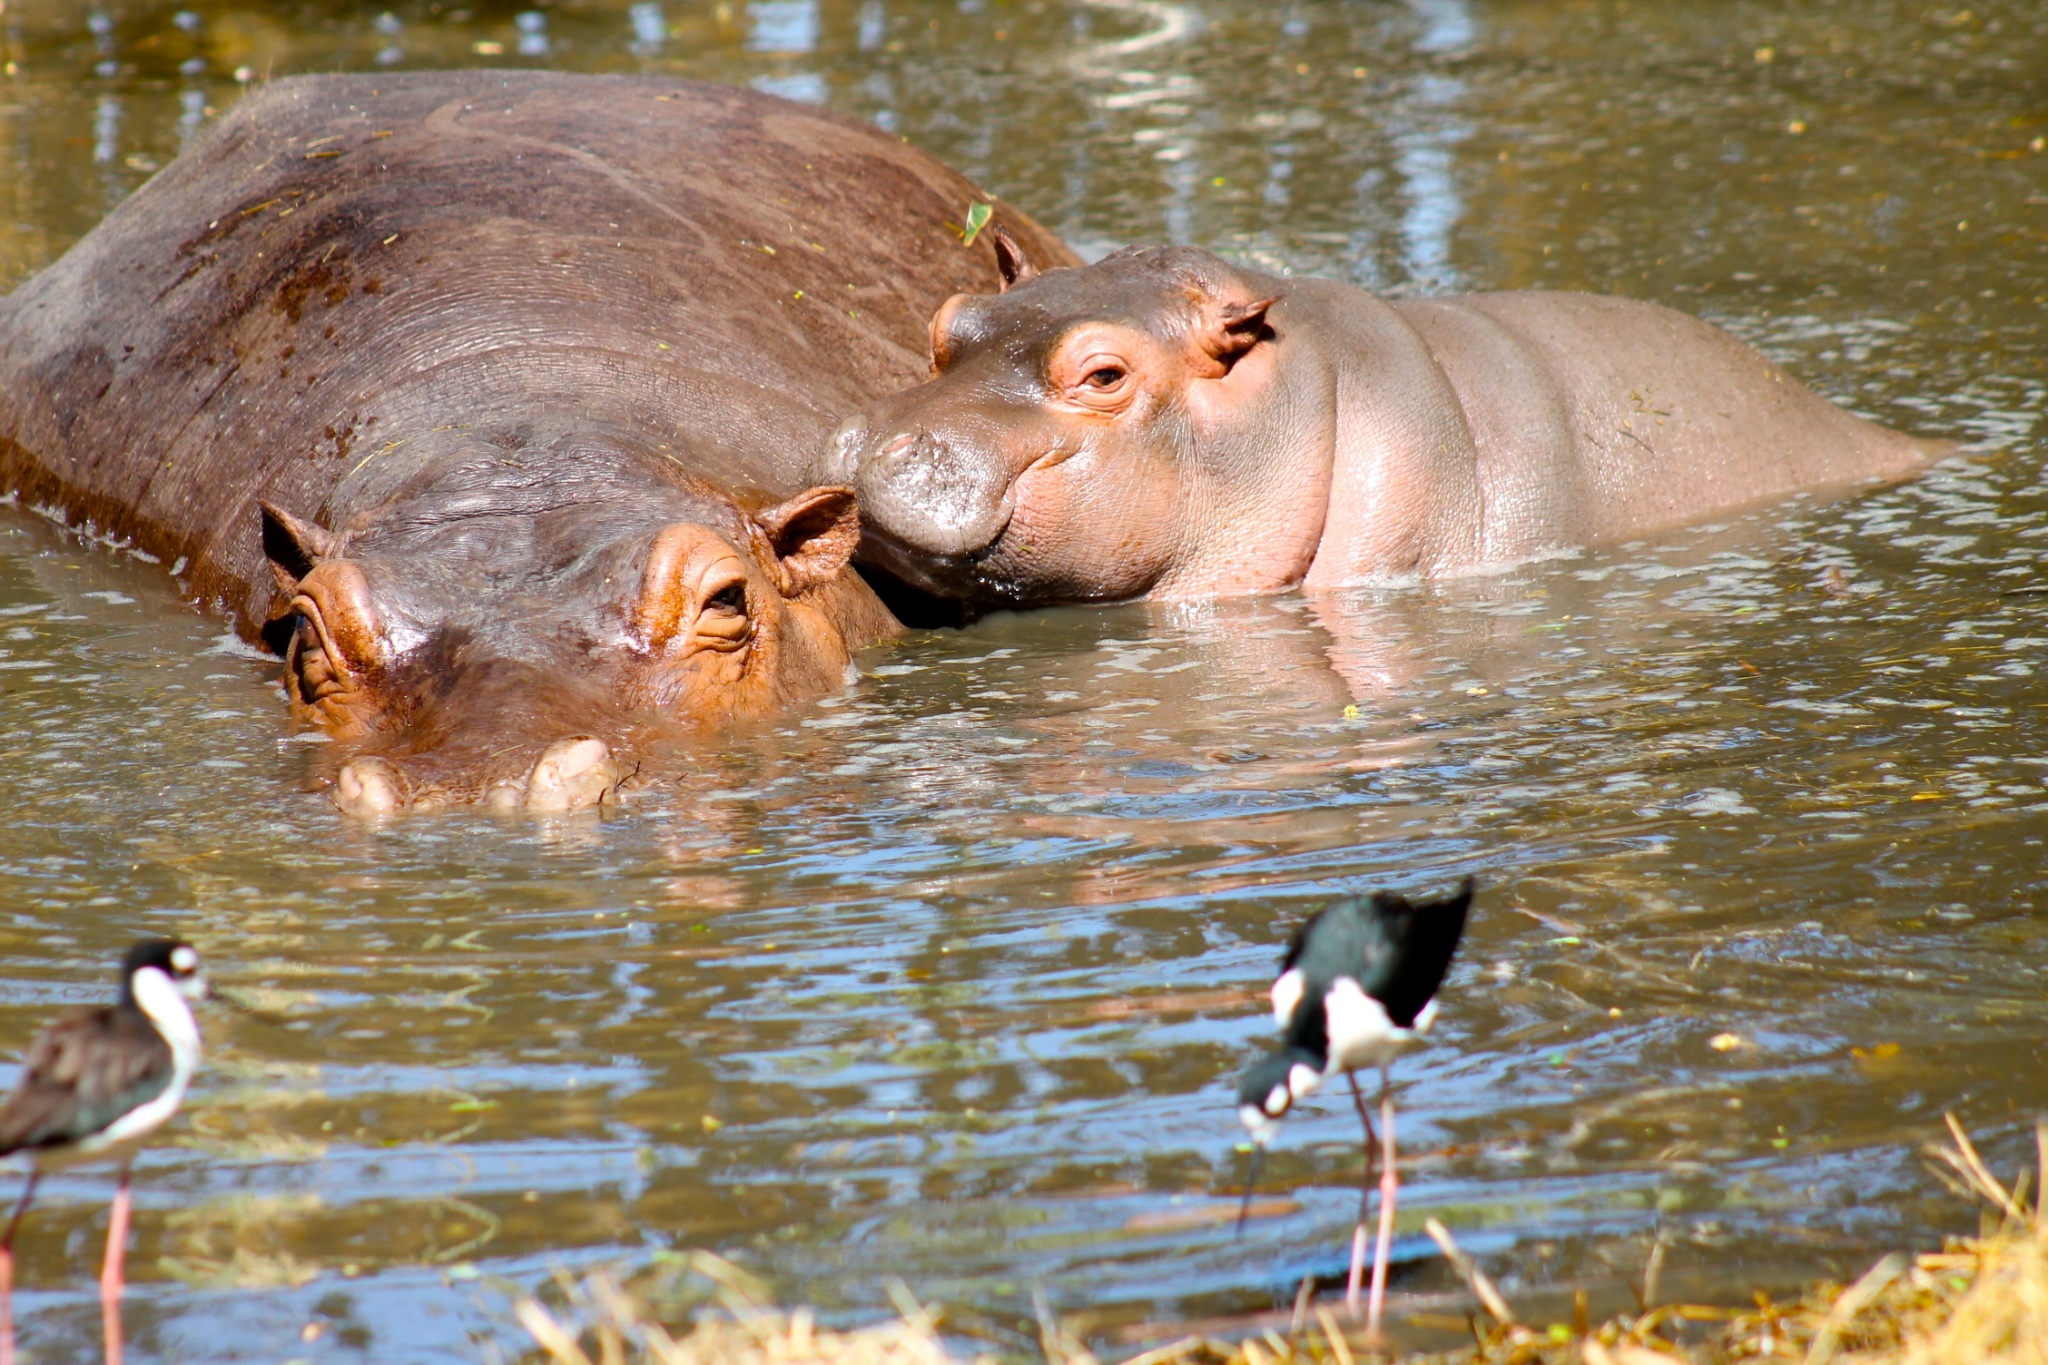 bay hippo at Auto Safari Chapin Guatemala